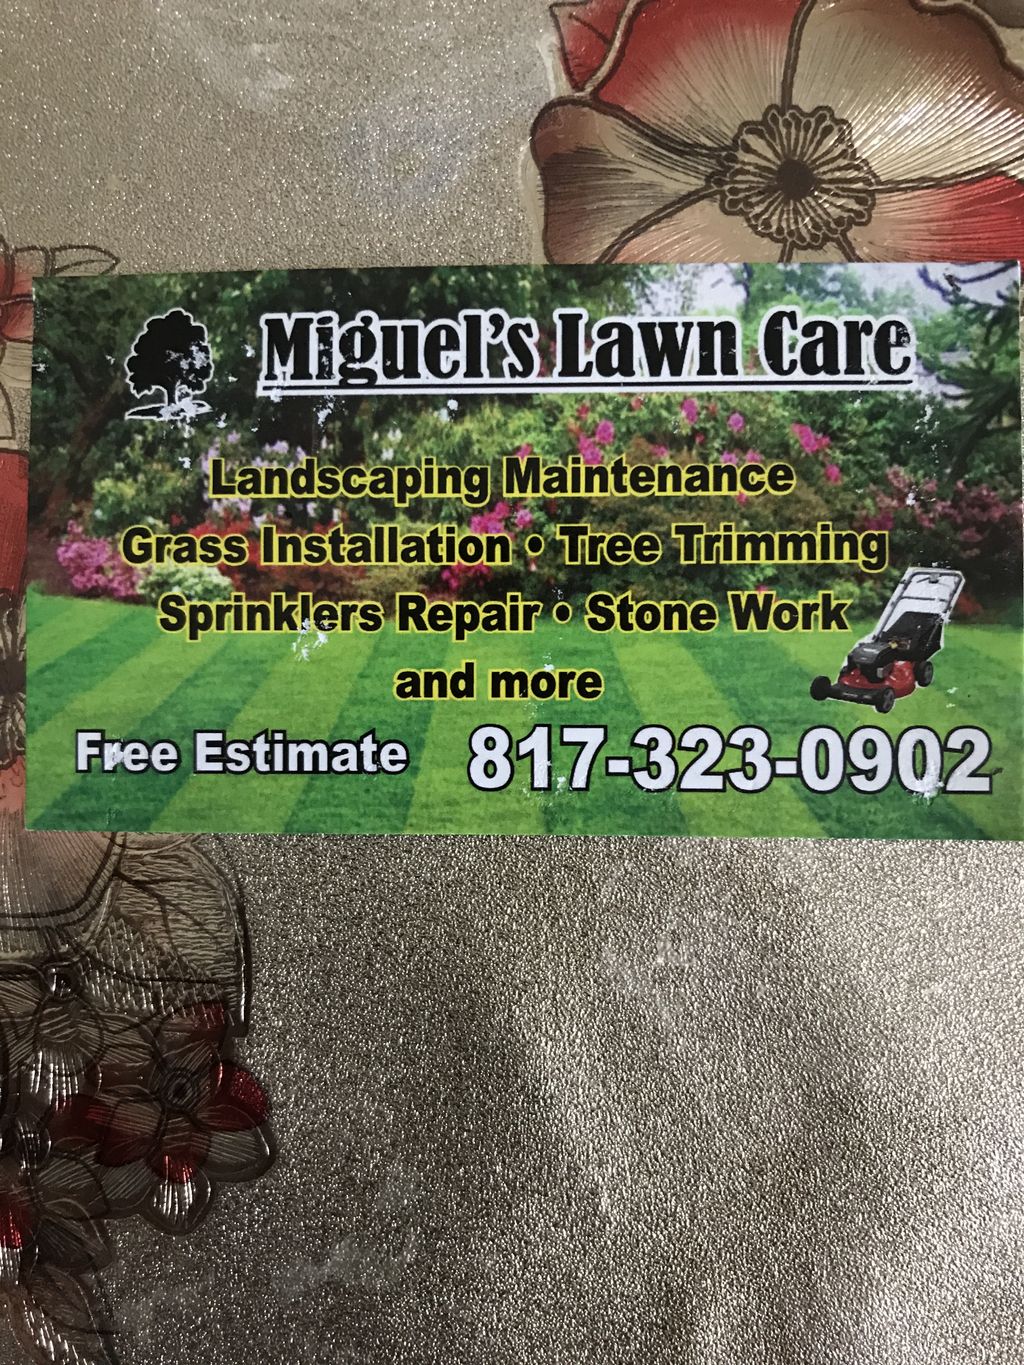 Miguel‘s lawn care